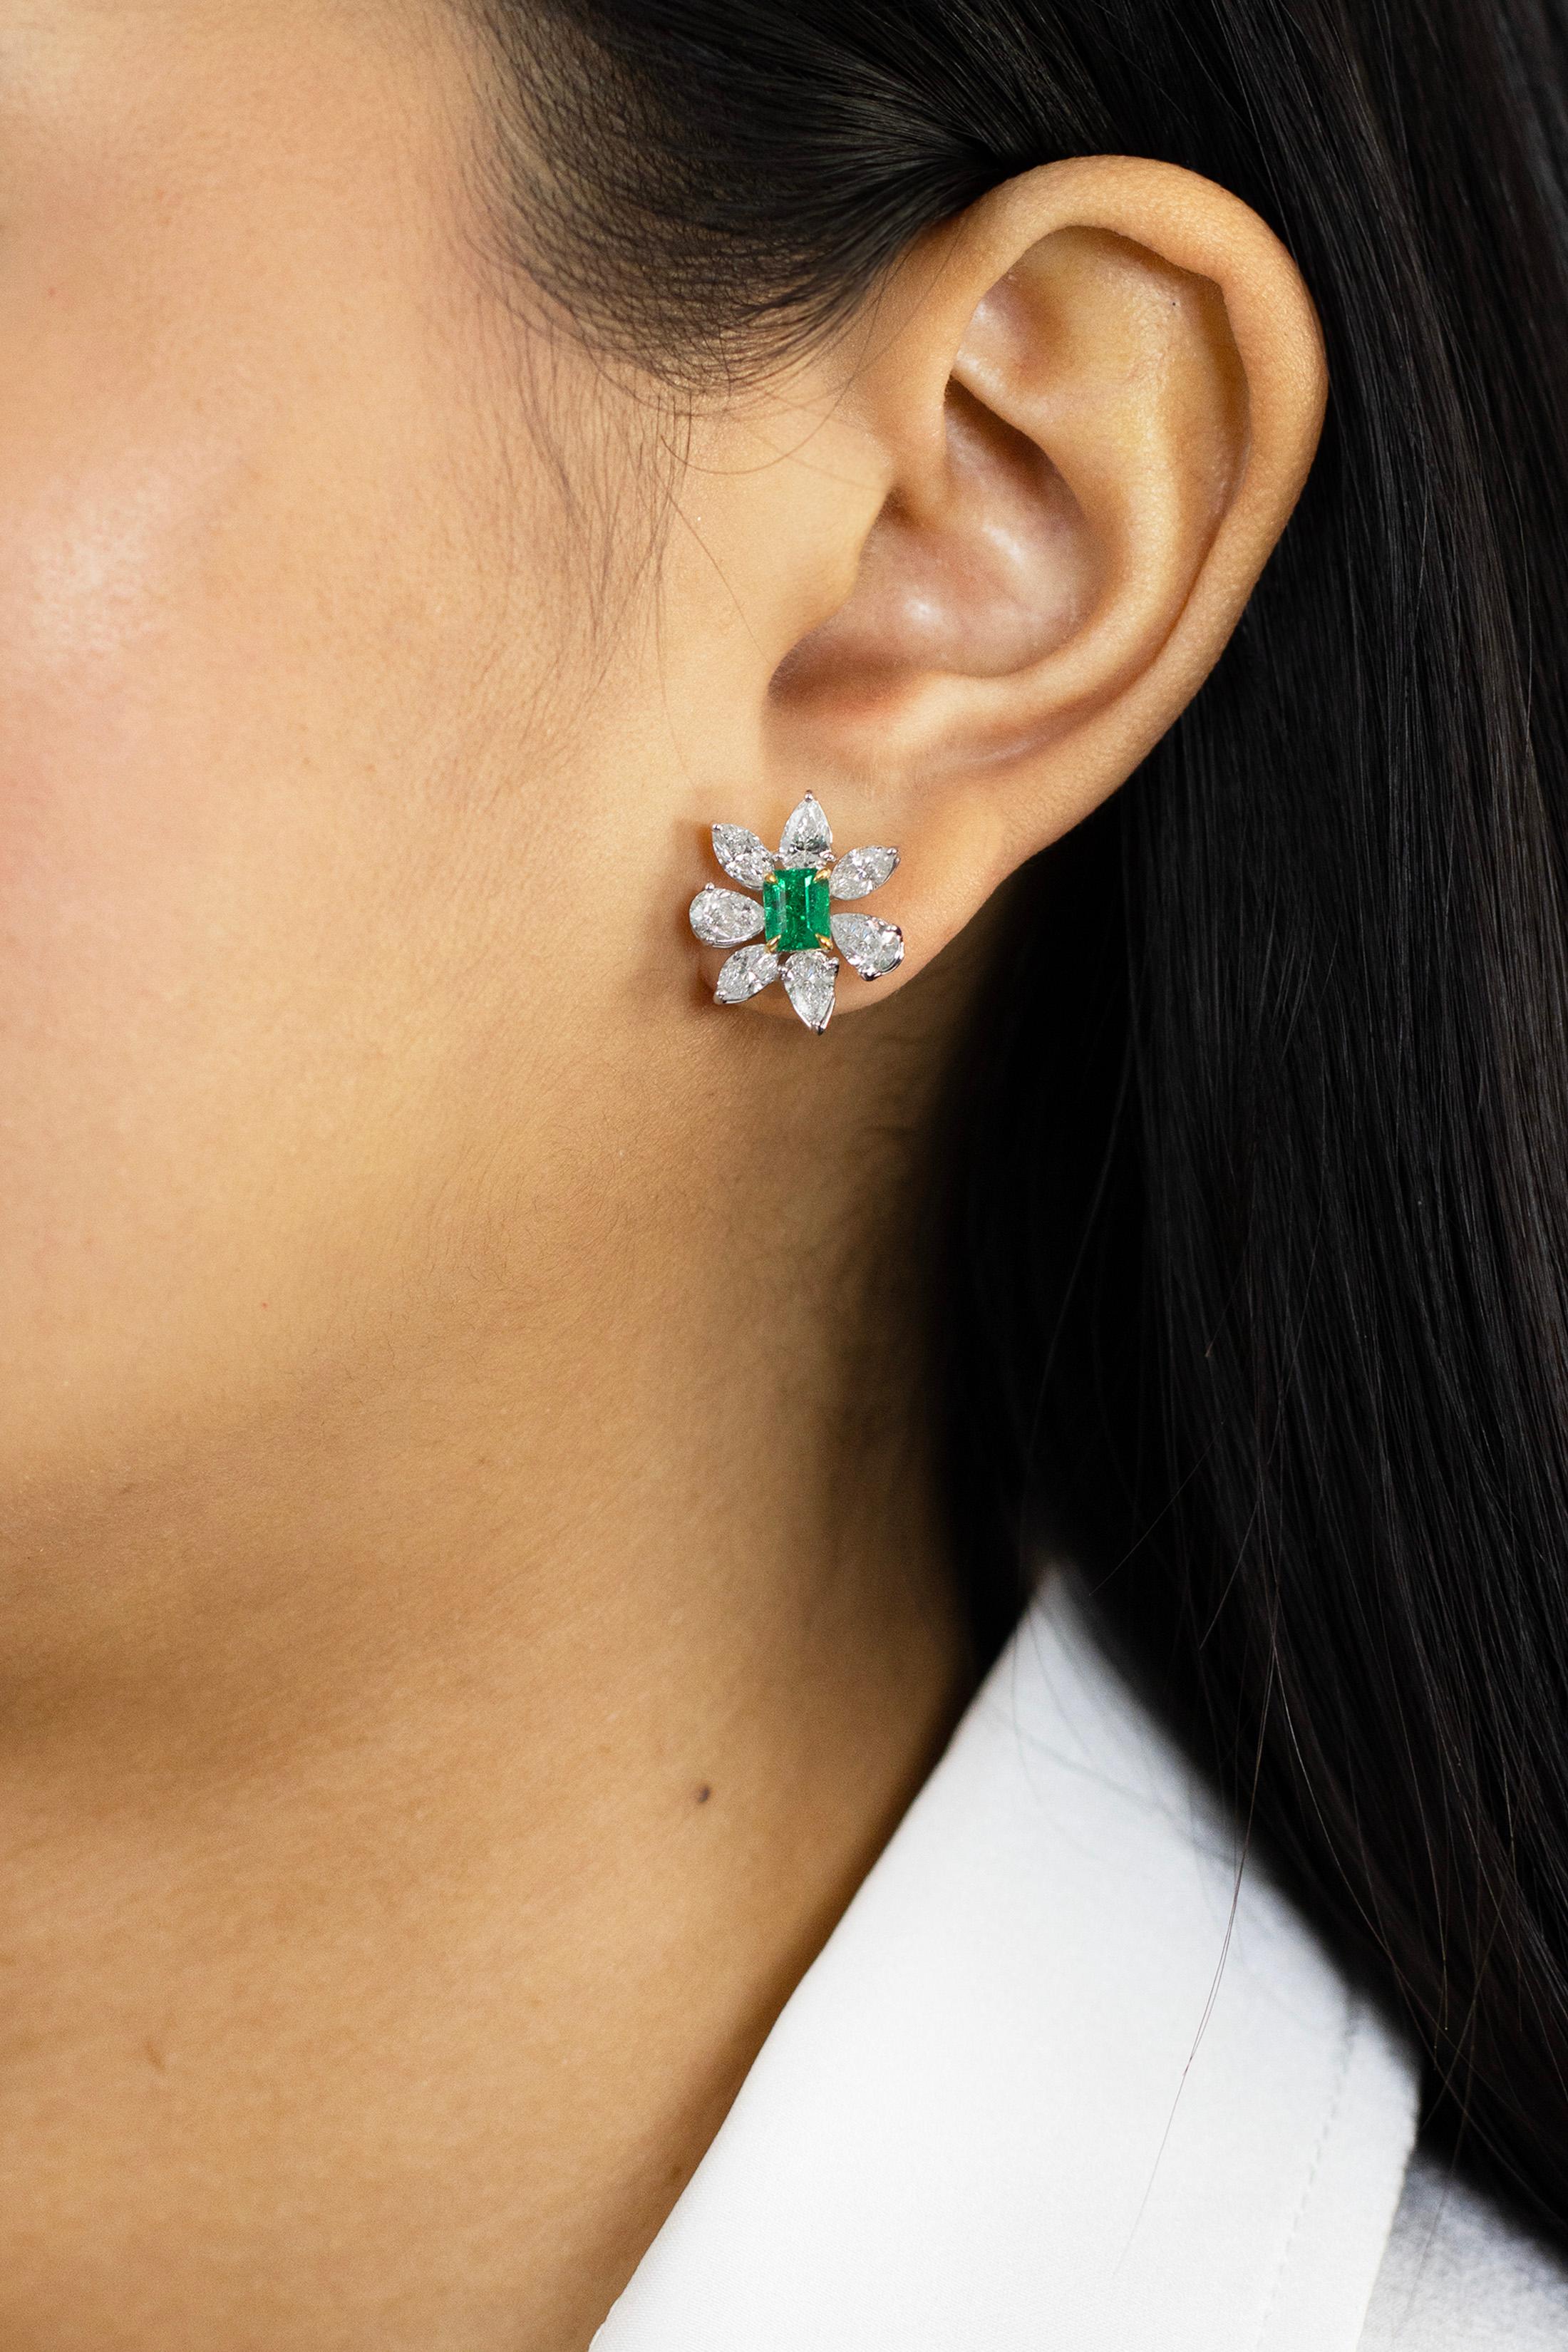 1.17 Carats Total Radiant Cut Green Emerald & Mixed Cut Diamond Stud Earrings For Sale 1